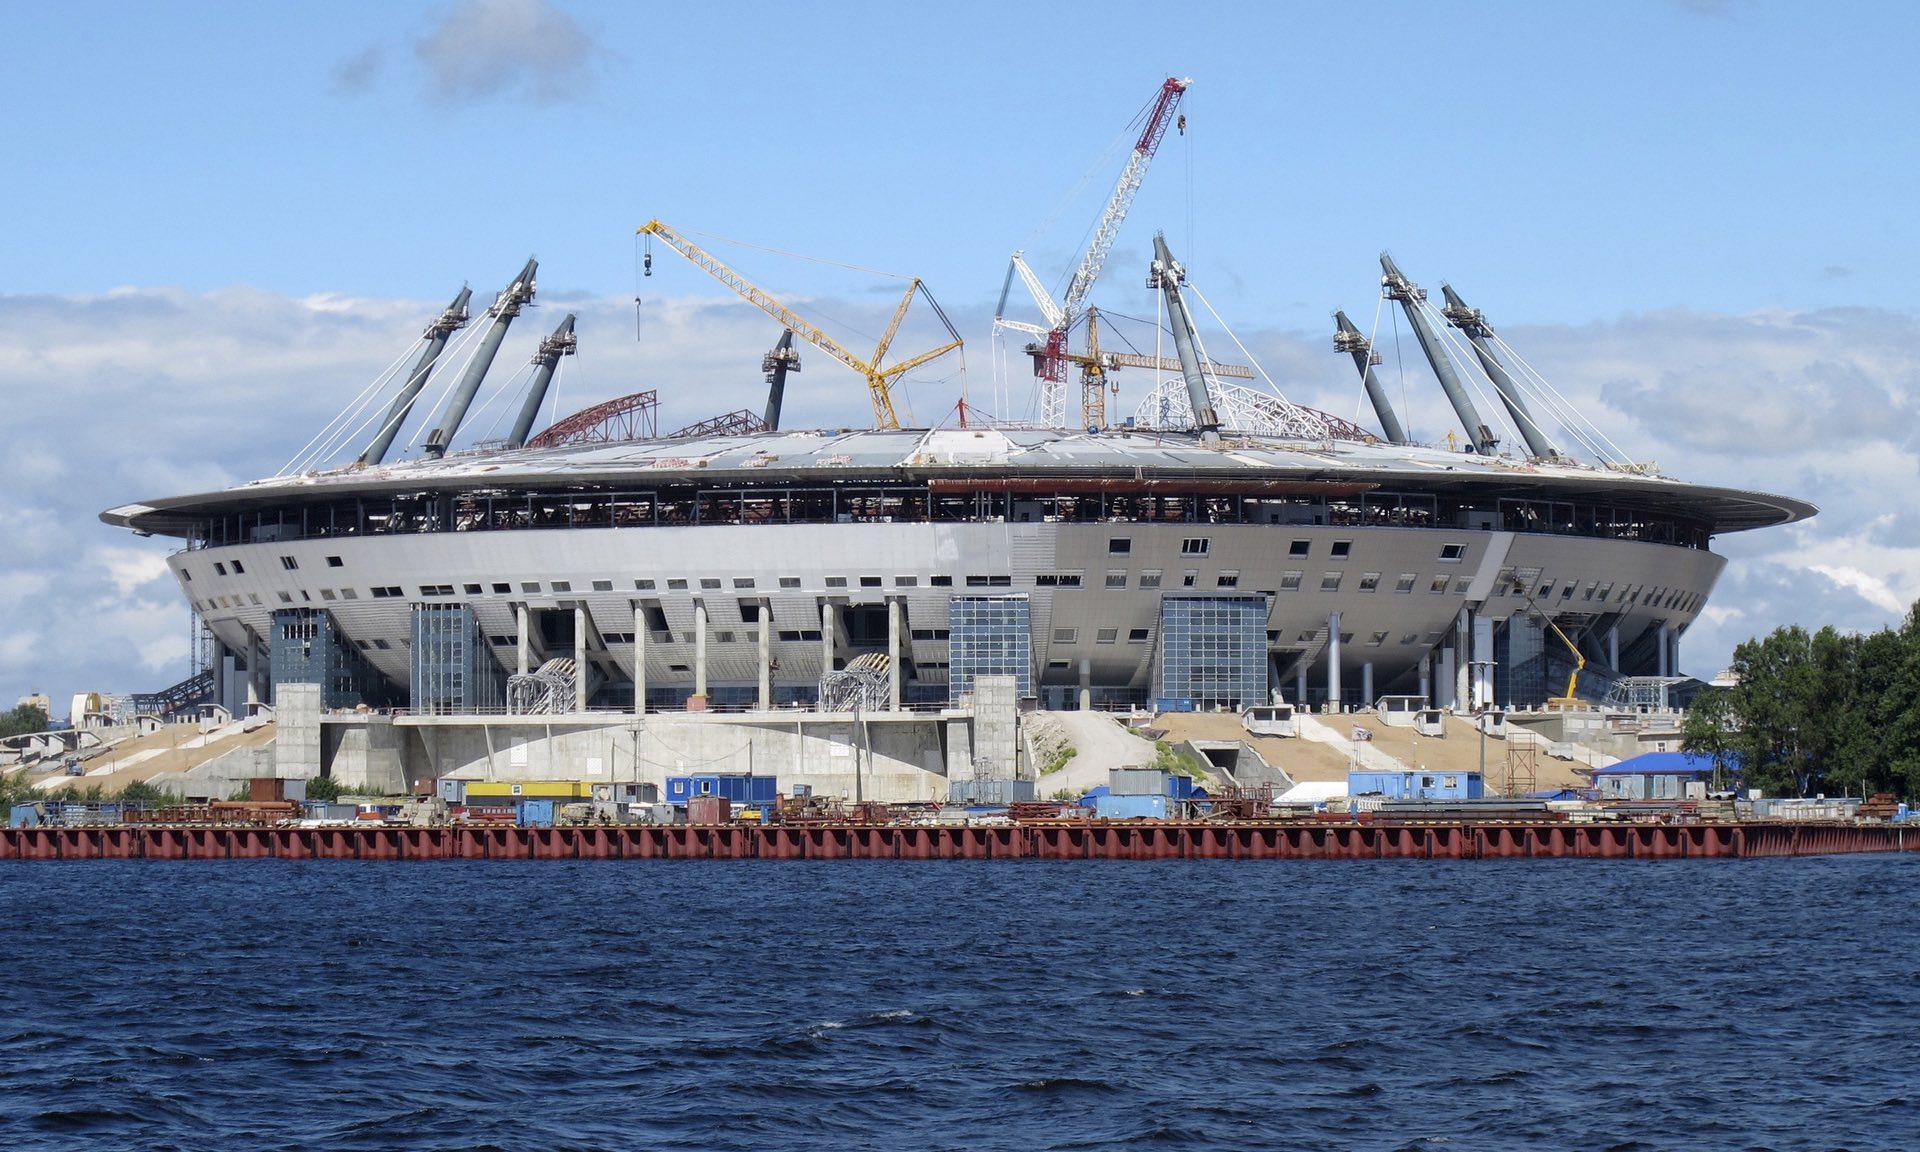 Stadion Zenit ketika dalam pembangunan pada tahun 2015 lalu. Copyright: Internet/Theguardian.com